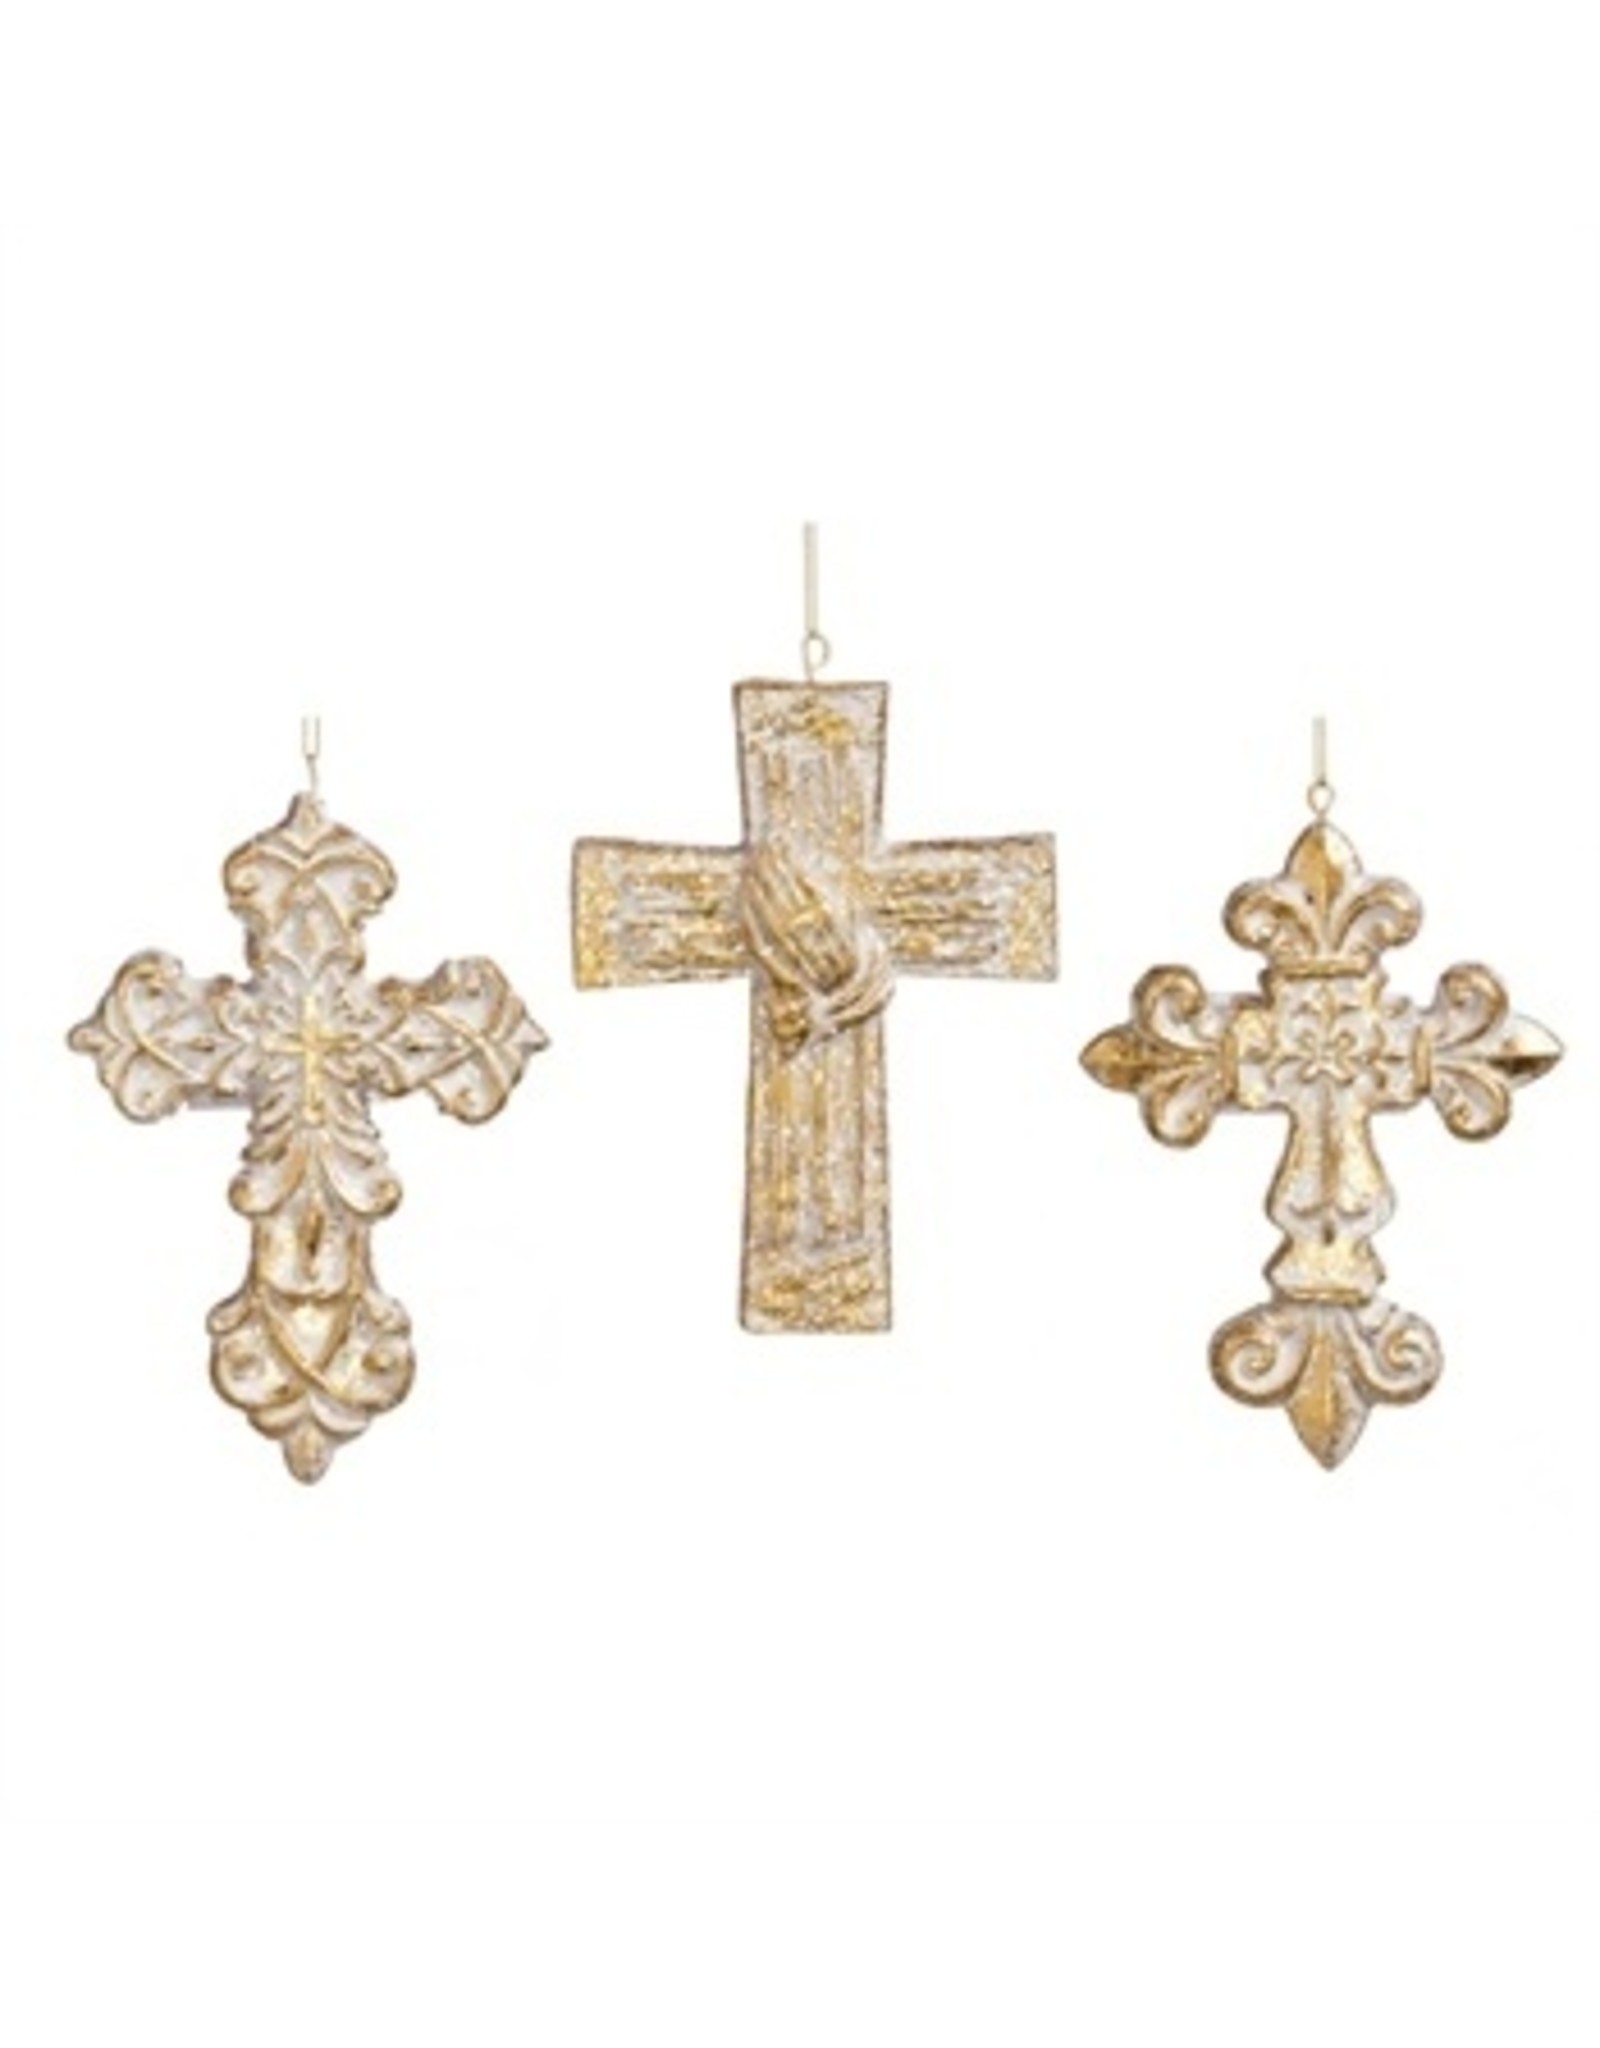 Evergreen Enterprises Gold Polystone Cross Ornament - Flourish Cross